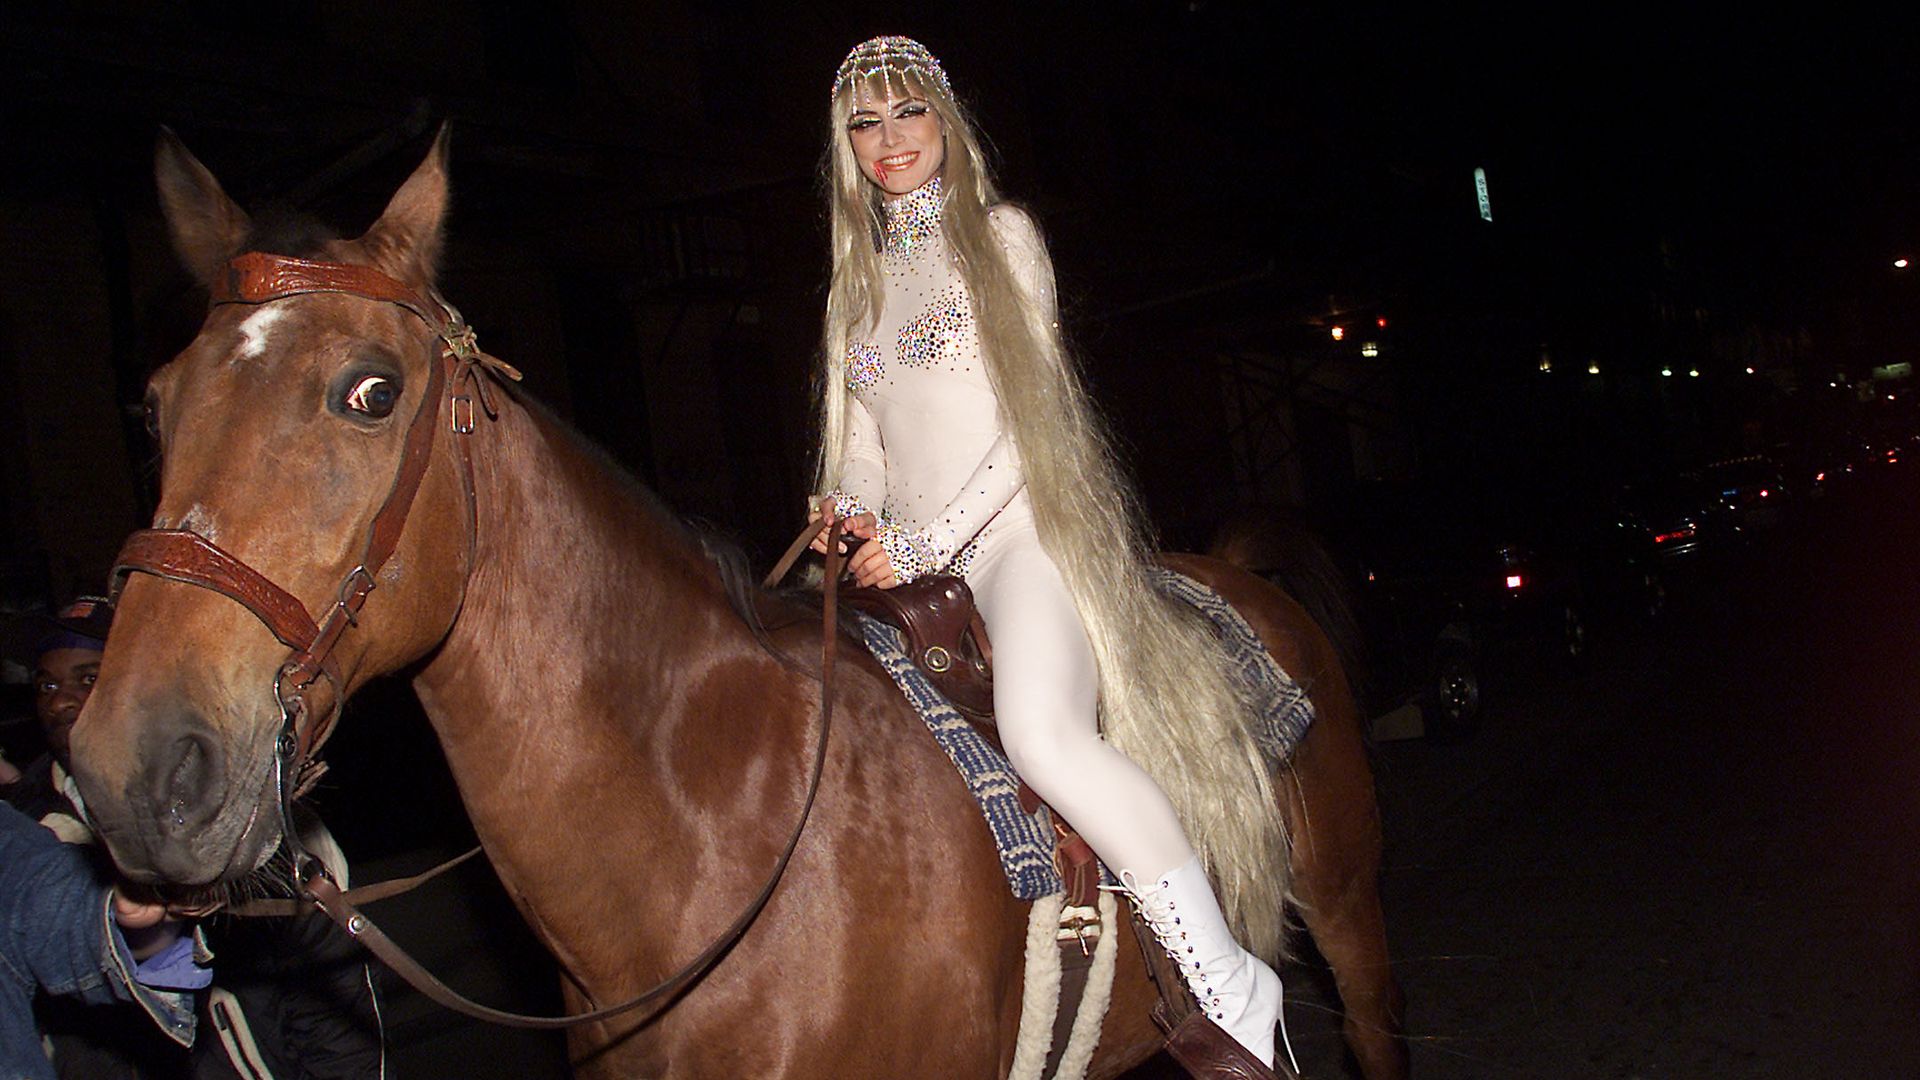 Heidi Klum arrives on horseback as Lady Godiva at her Annual Halloween Party 